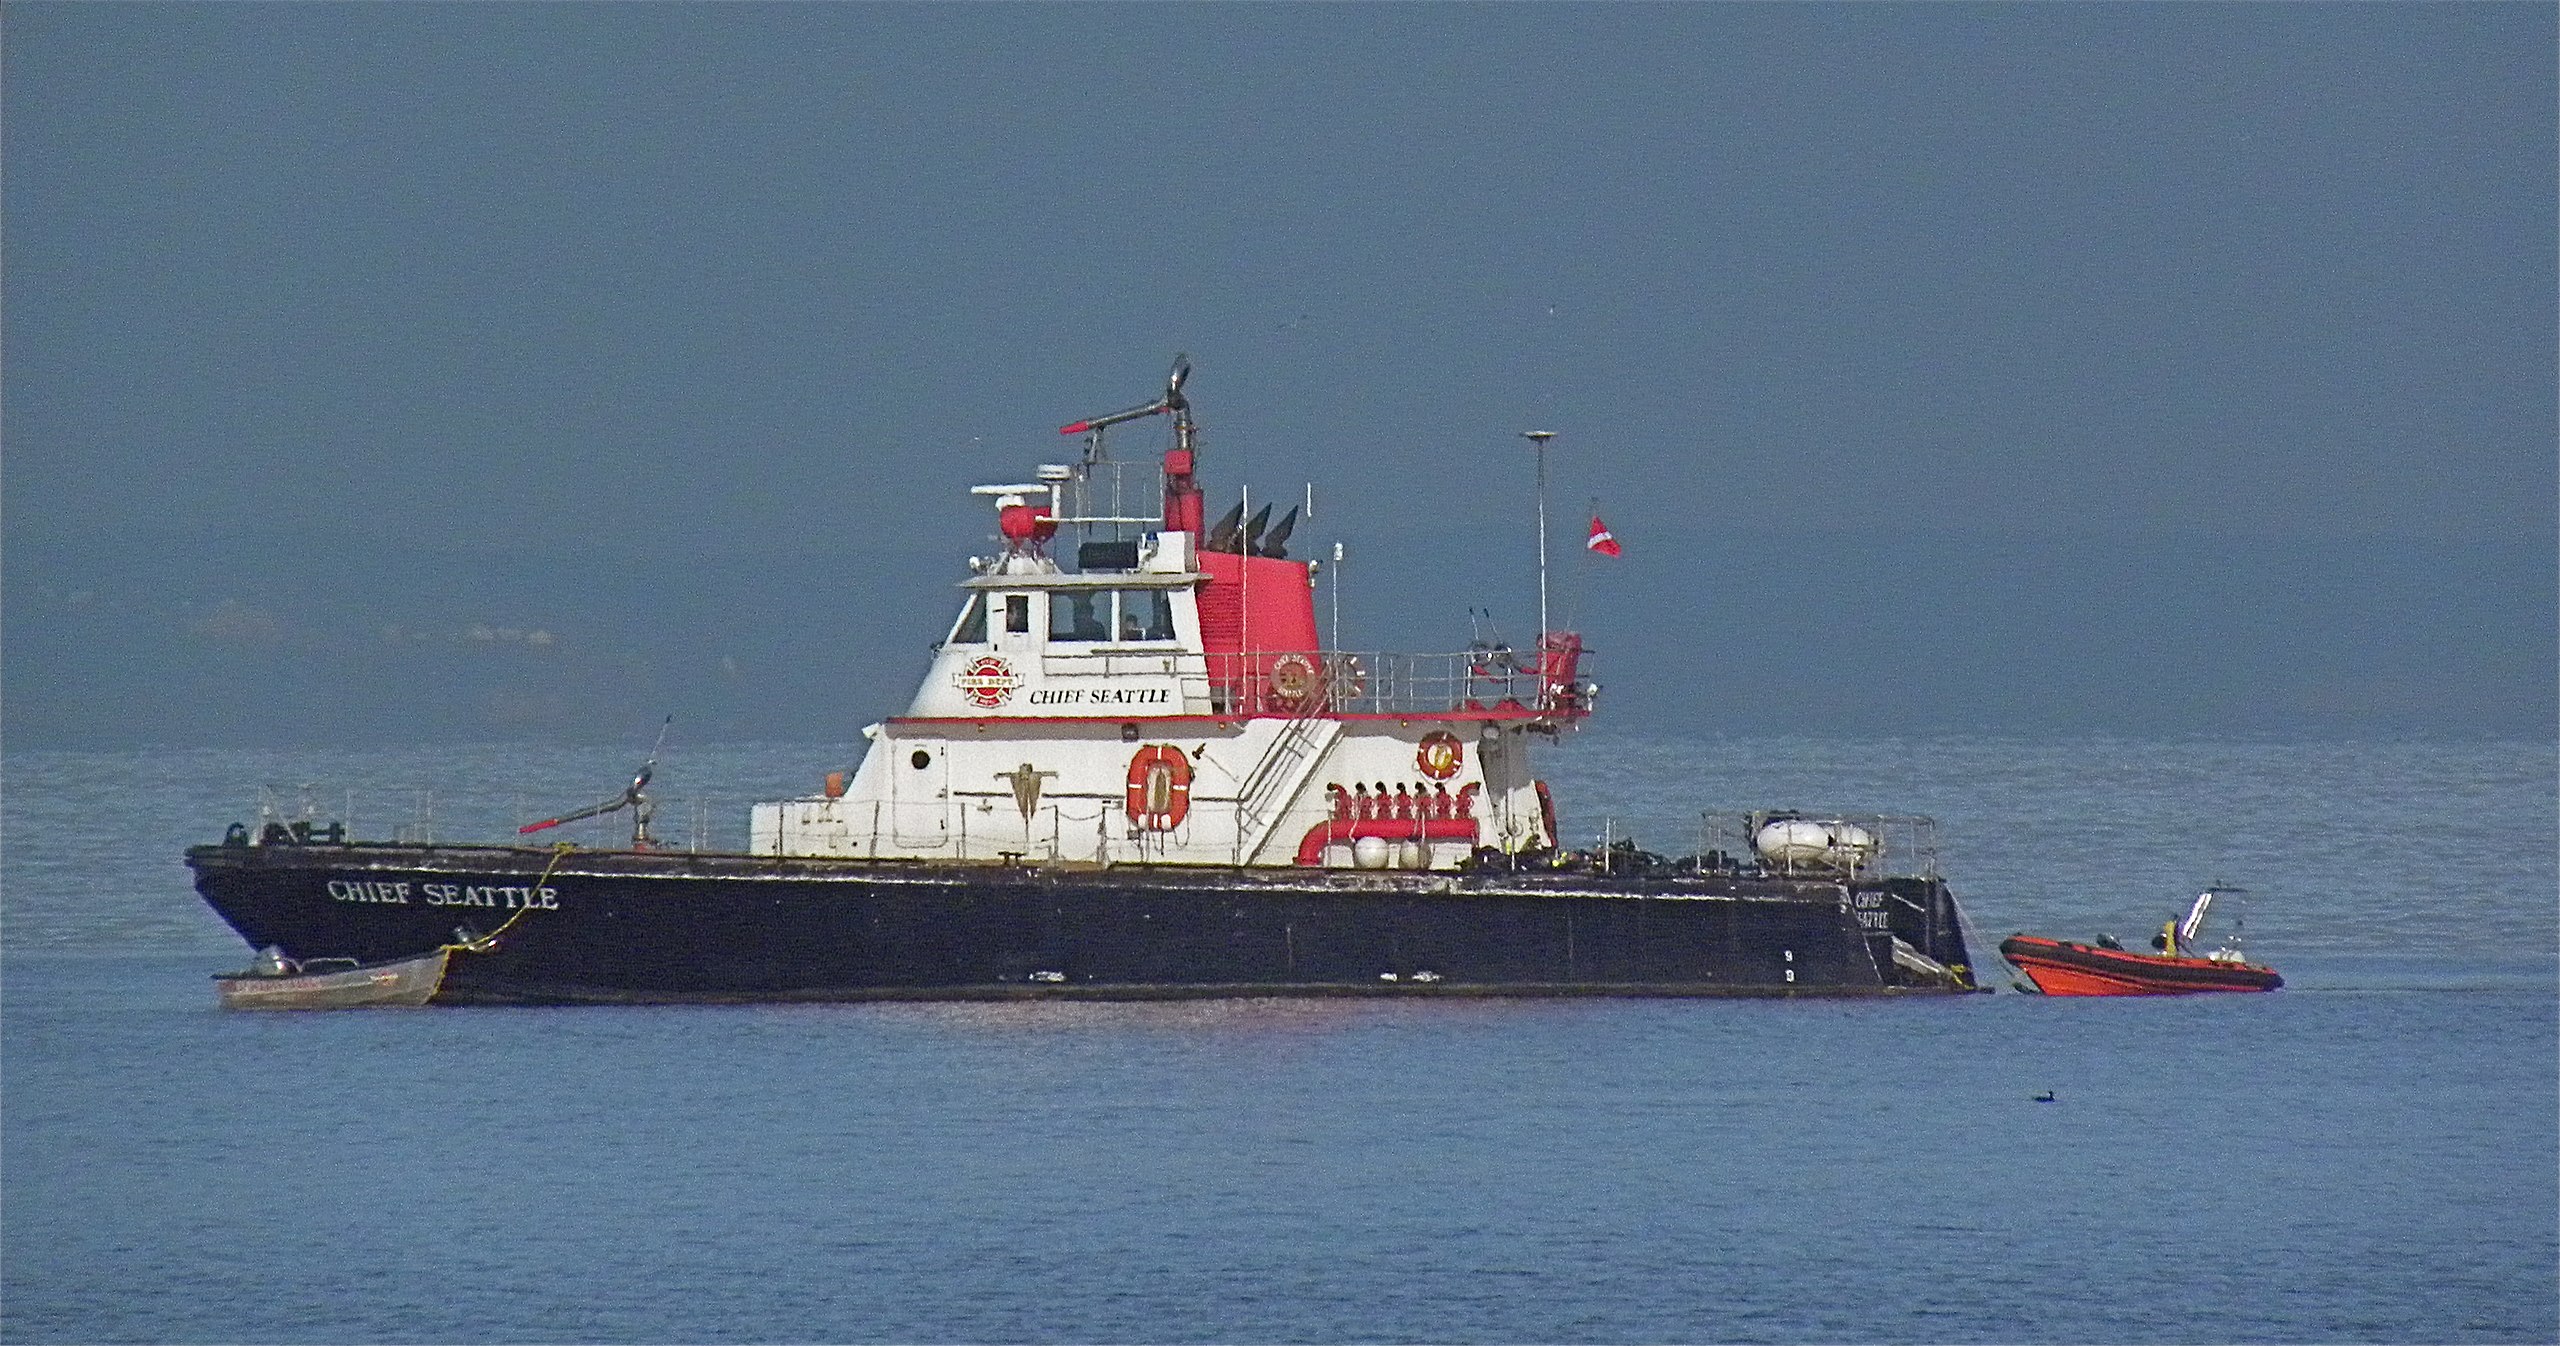 Chief Seattle fire boat -a.jpg